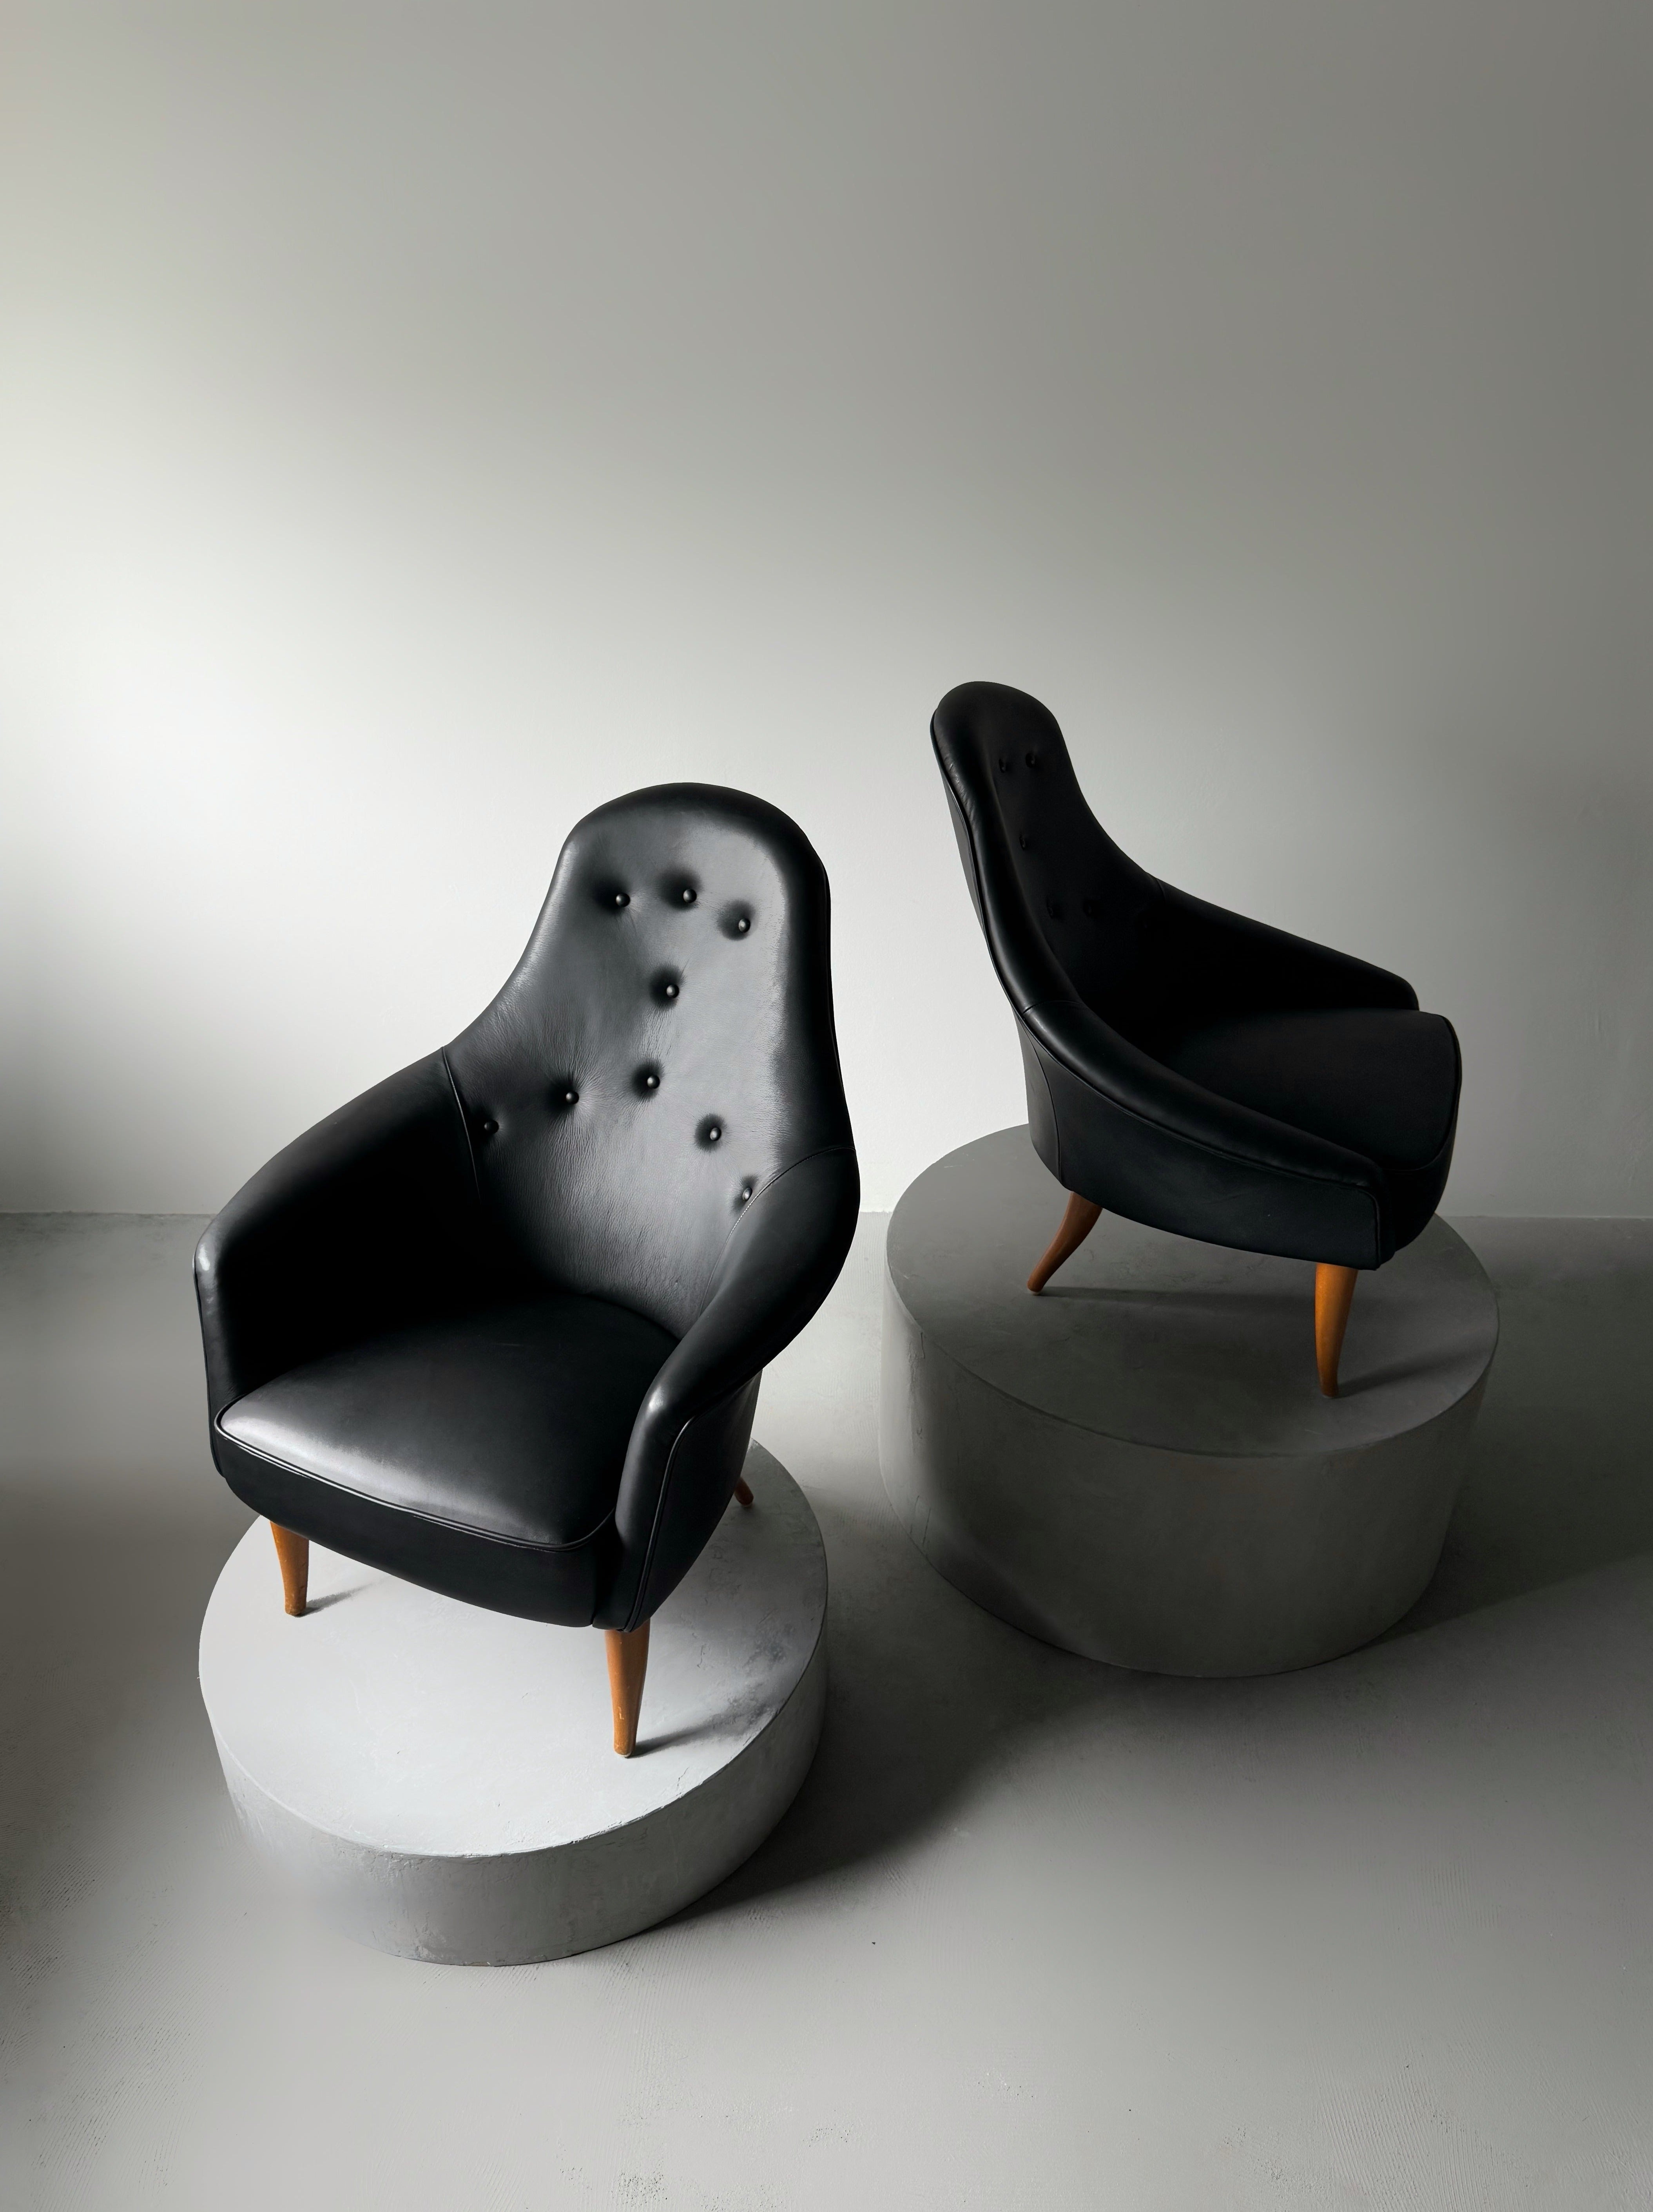 Pair of Little Adam and Little Eva armchairs by Kerstin Hörlin-Holmquist for Nordiska Kompaniet